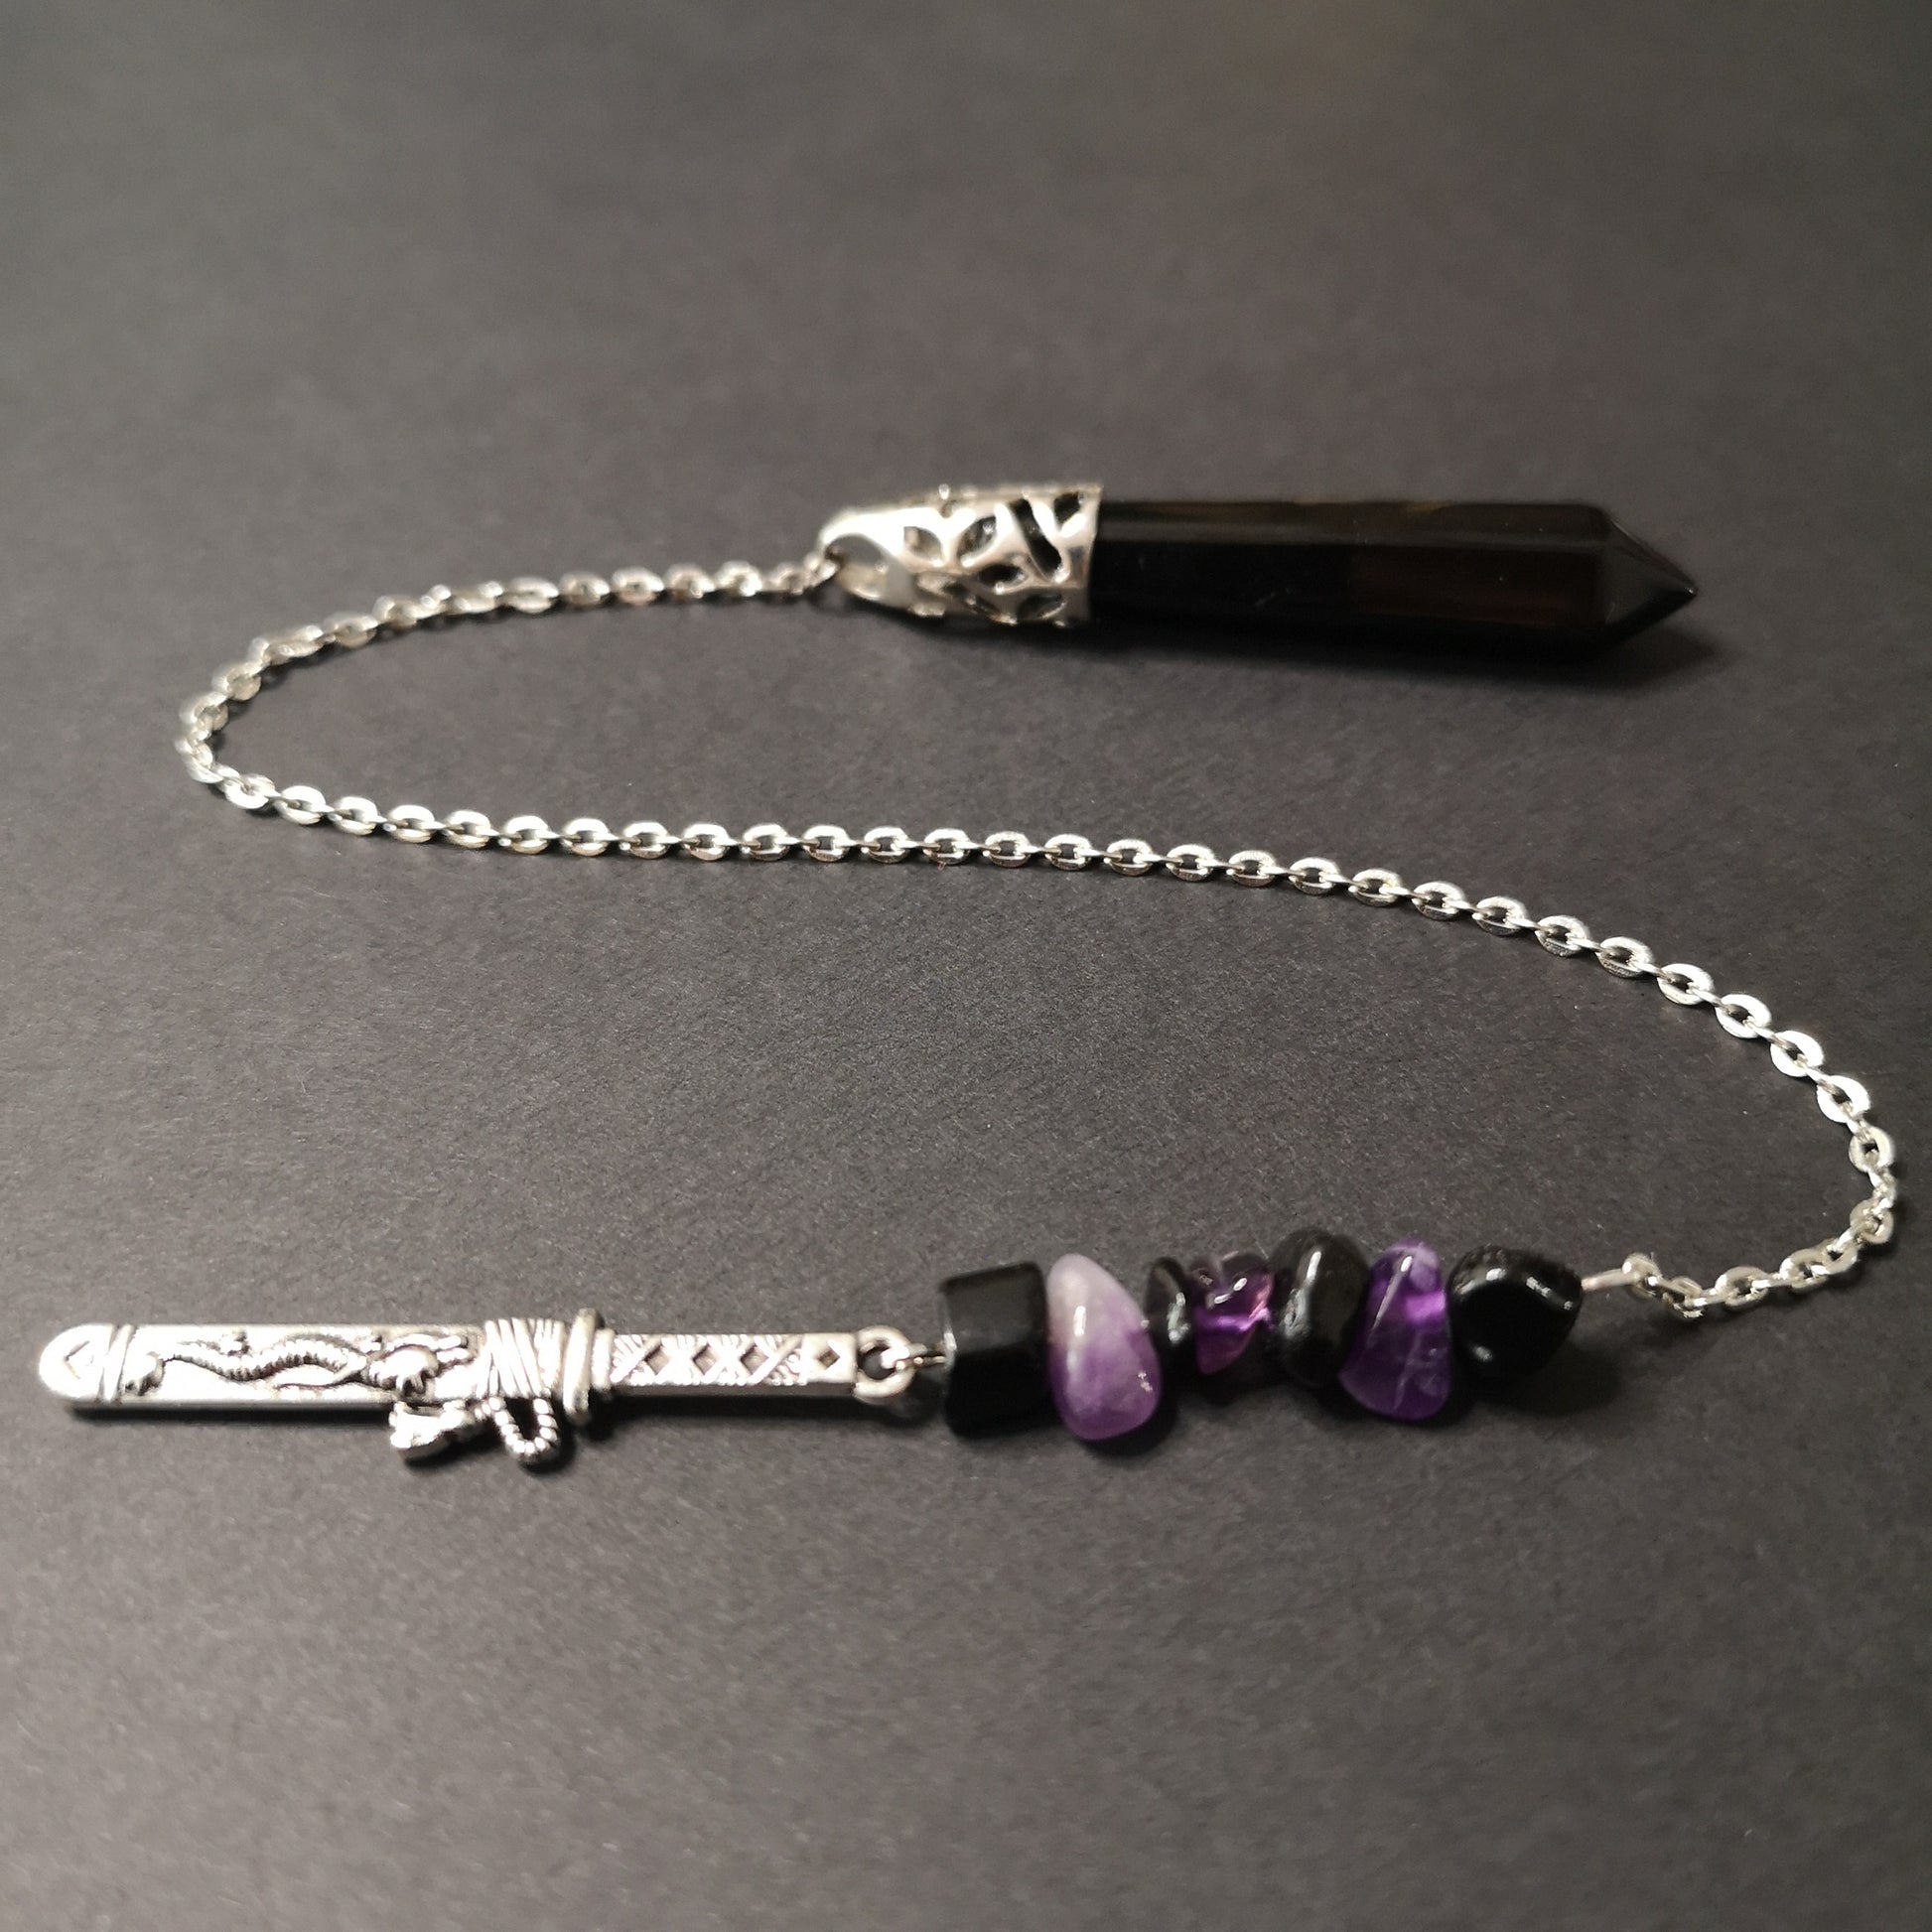 Onyx, obsidian and amethyst pendulum with a tanto dagger charm